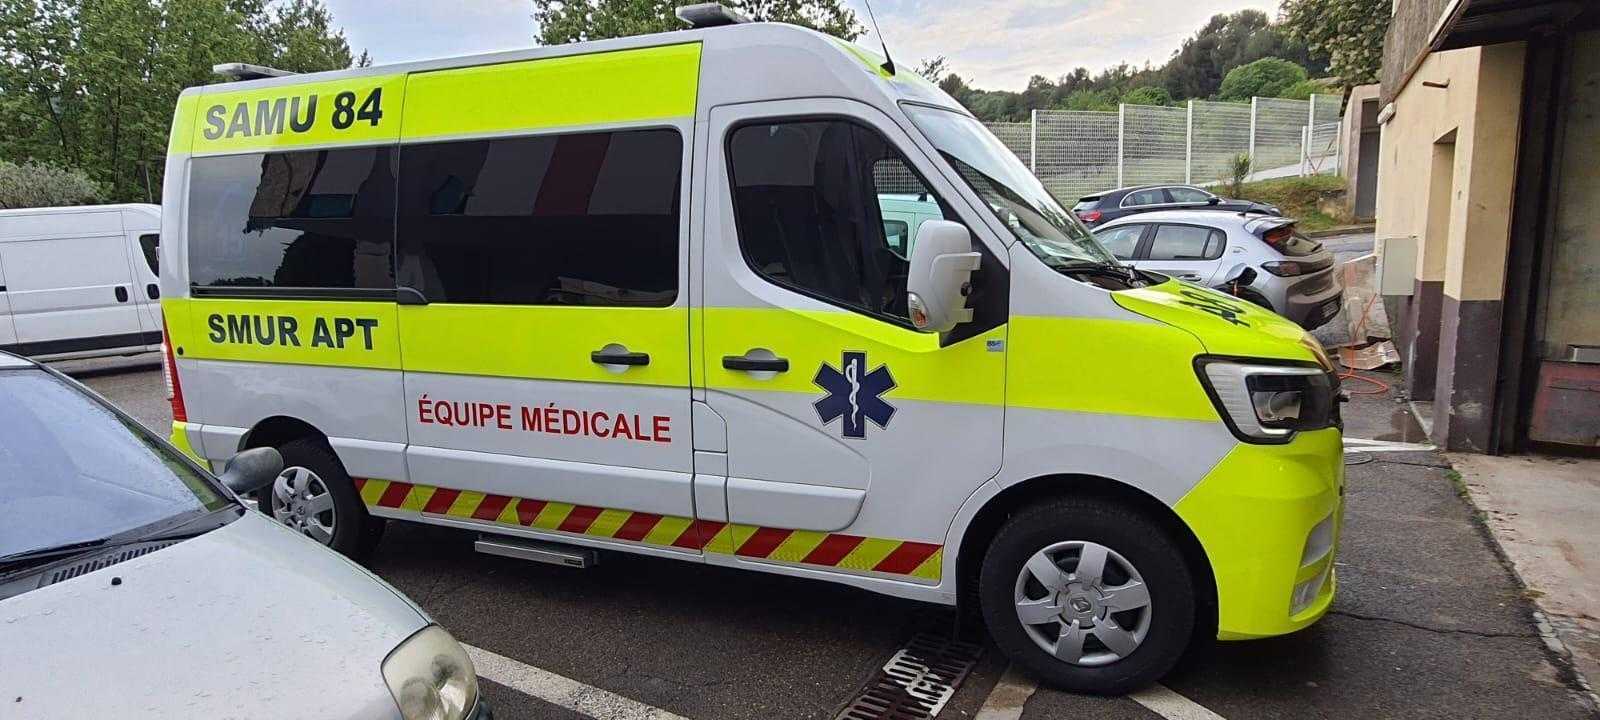 flocage-ambulance-covering-samu-police-1